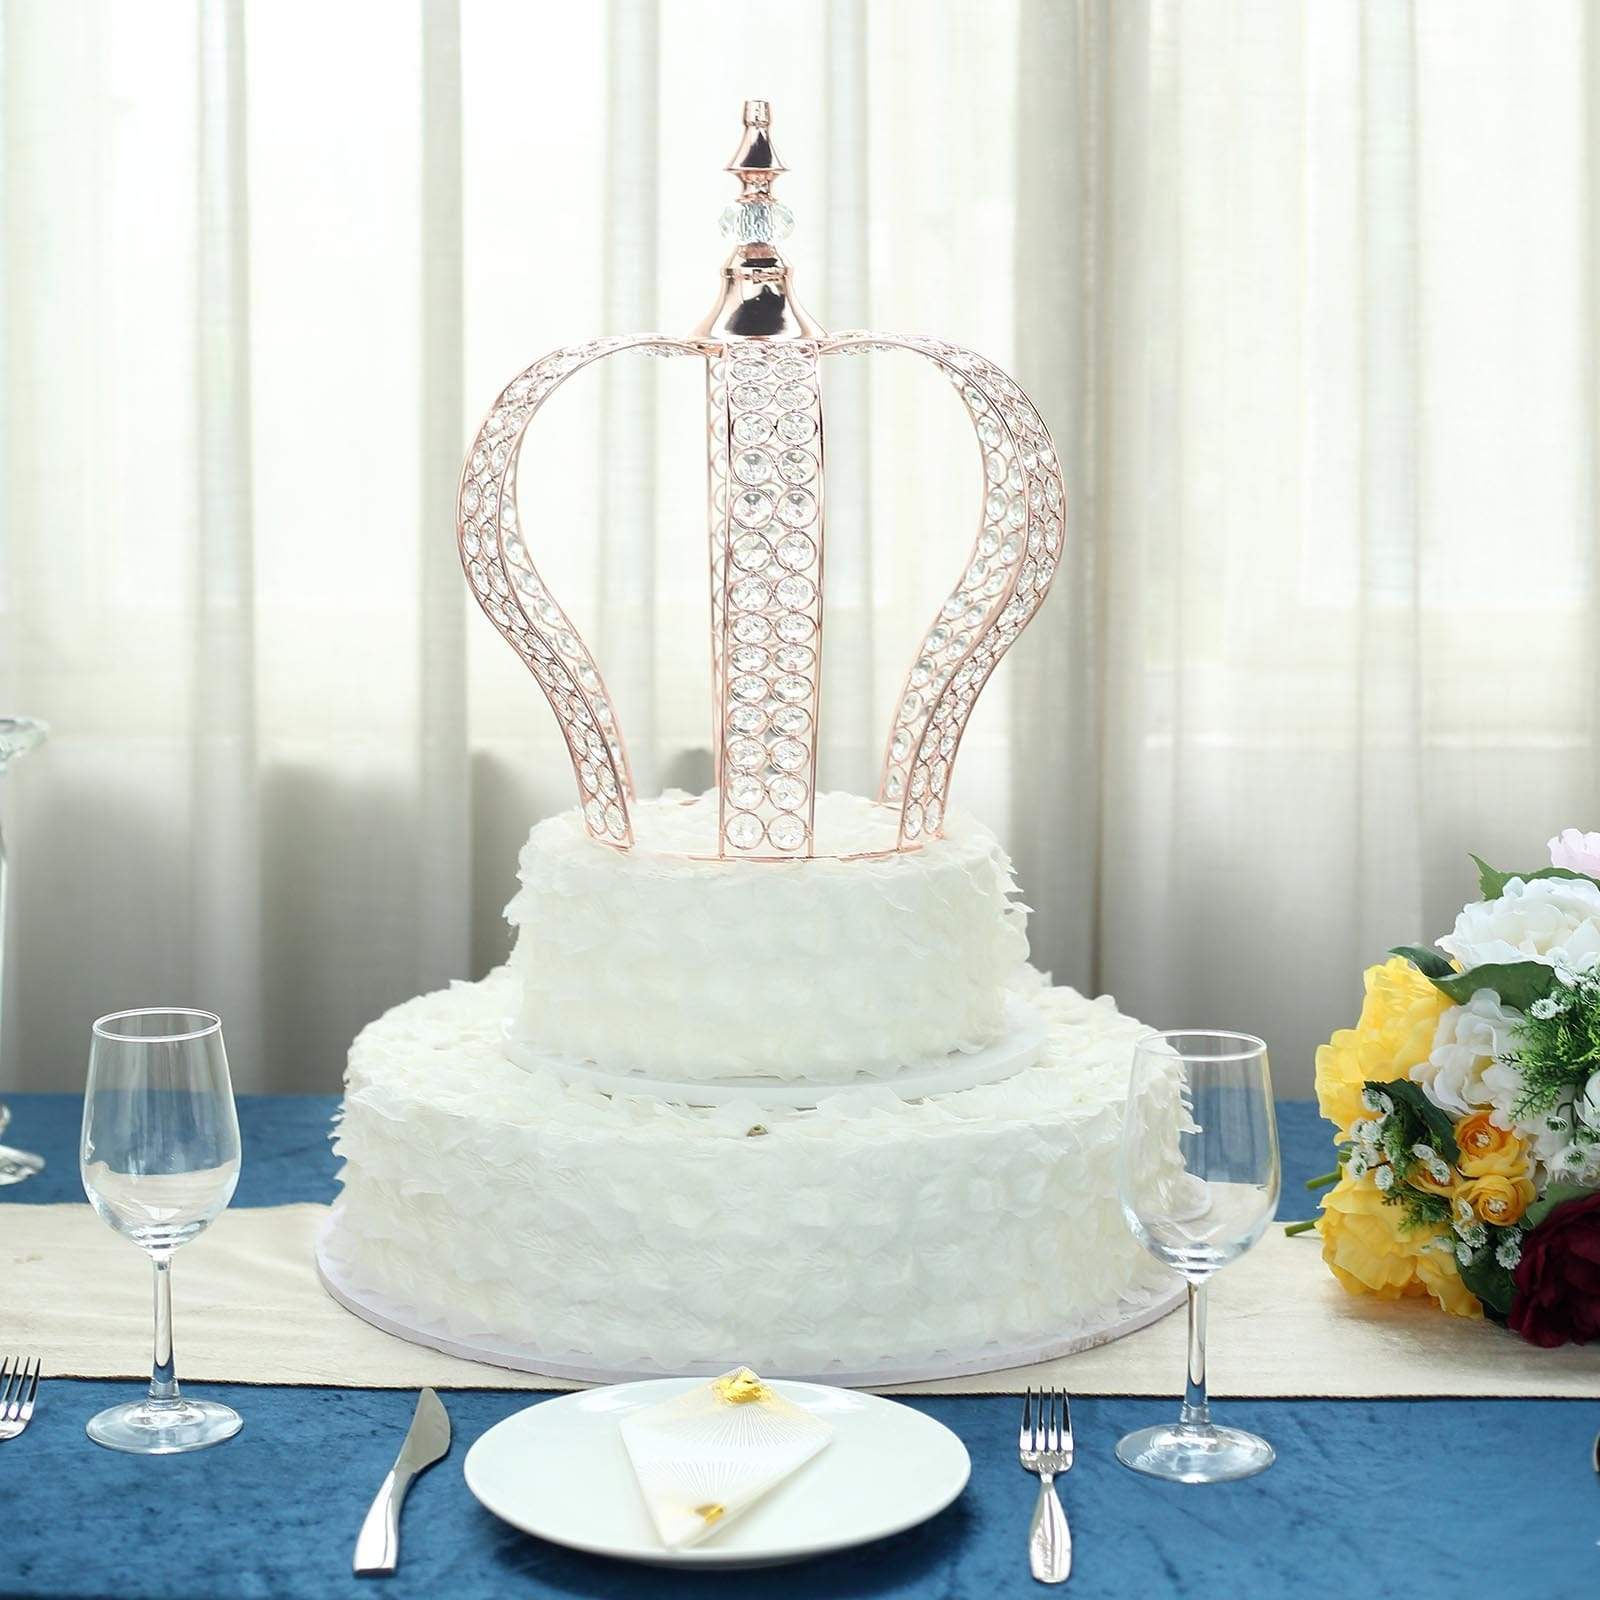 16 in tall Crystal Beaded Metal Crown Cake Topper